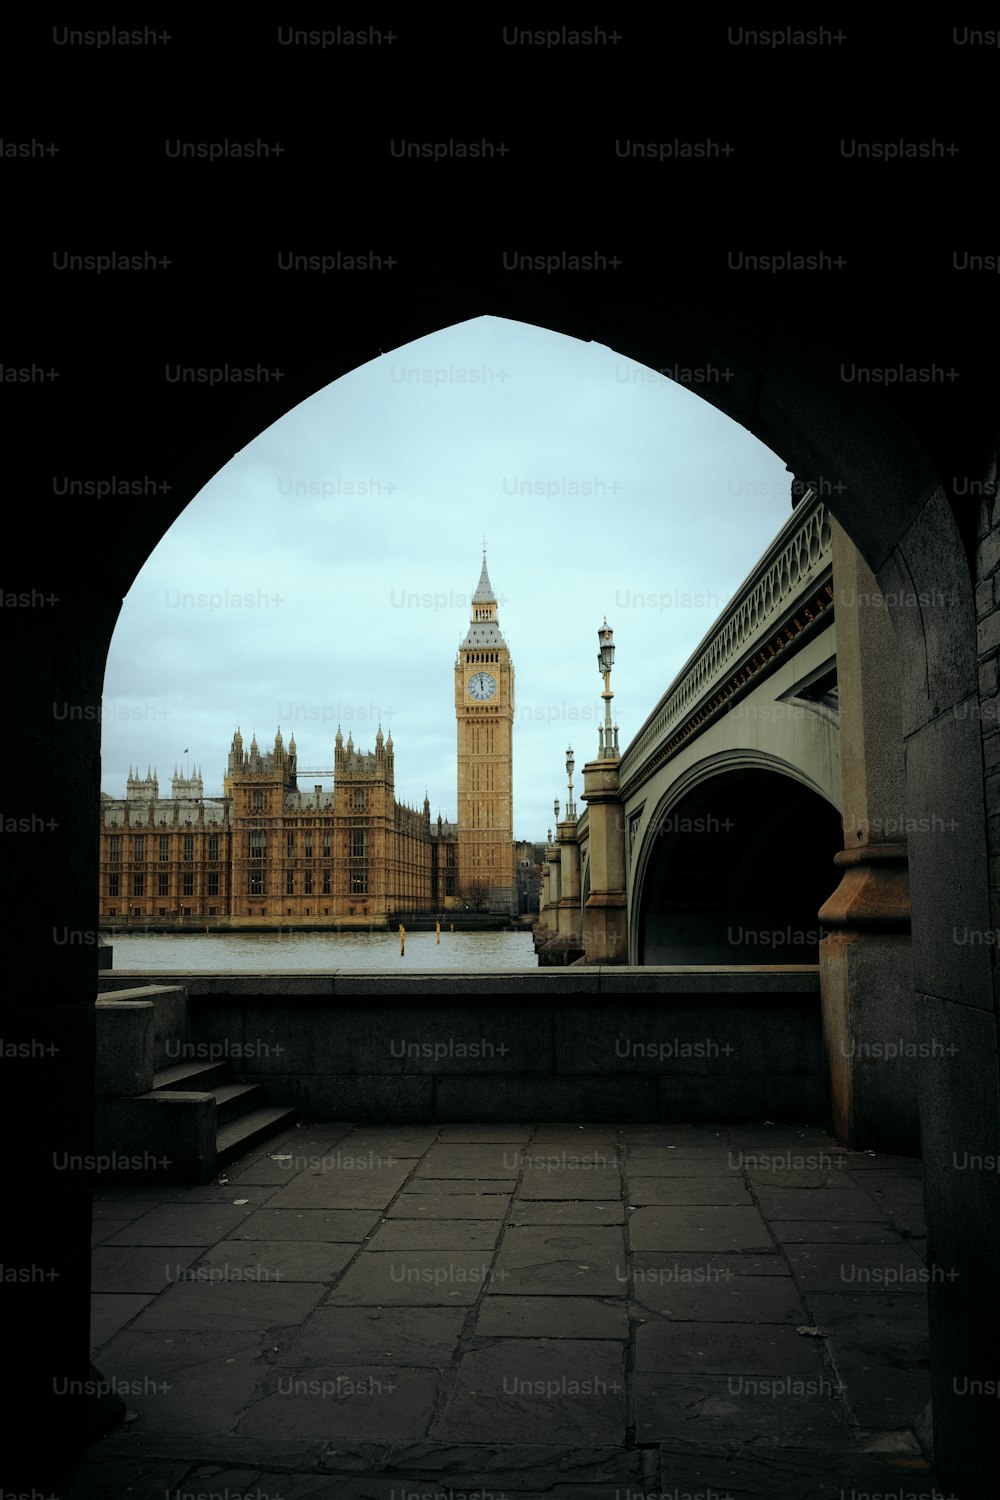 a view of the big ben clock tower through an arch